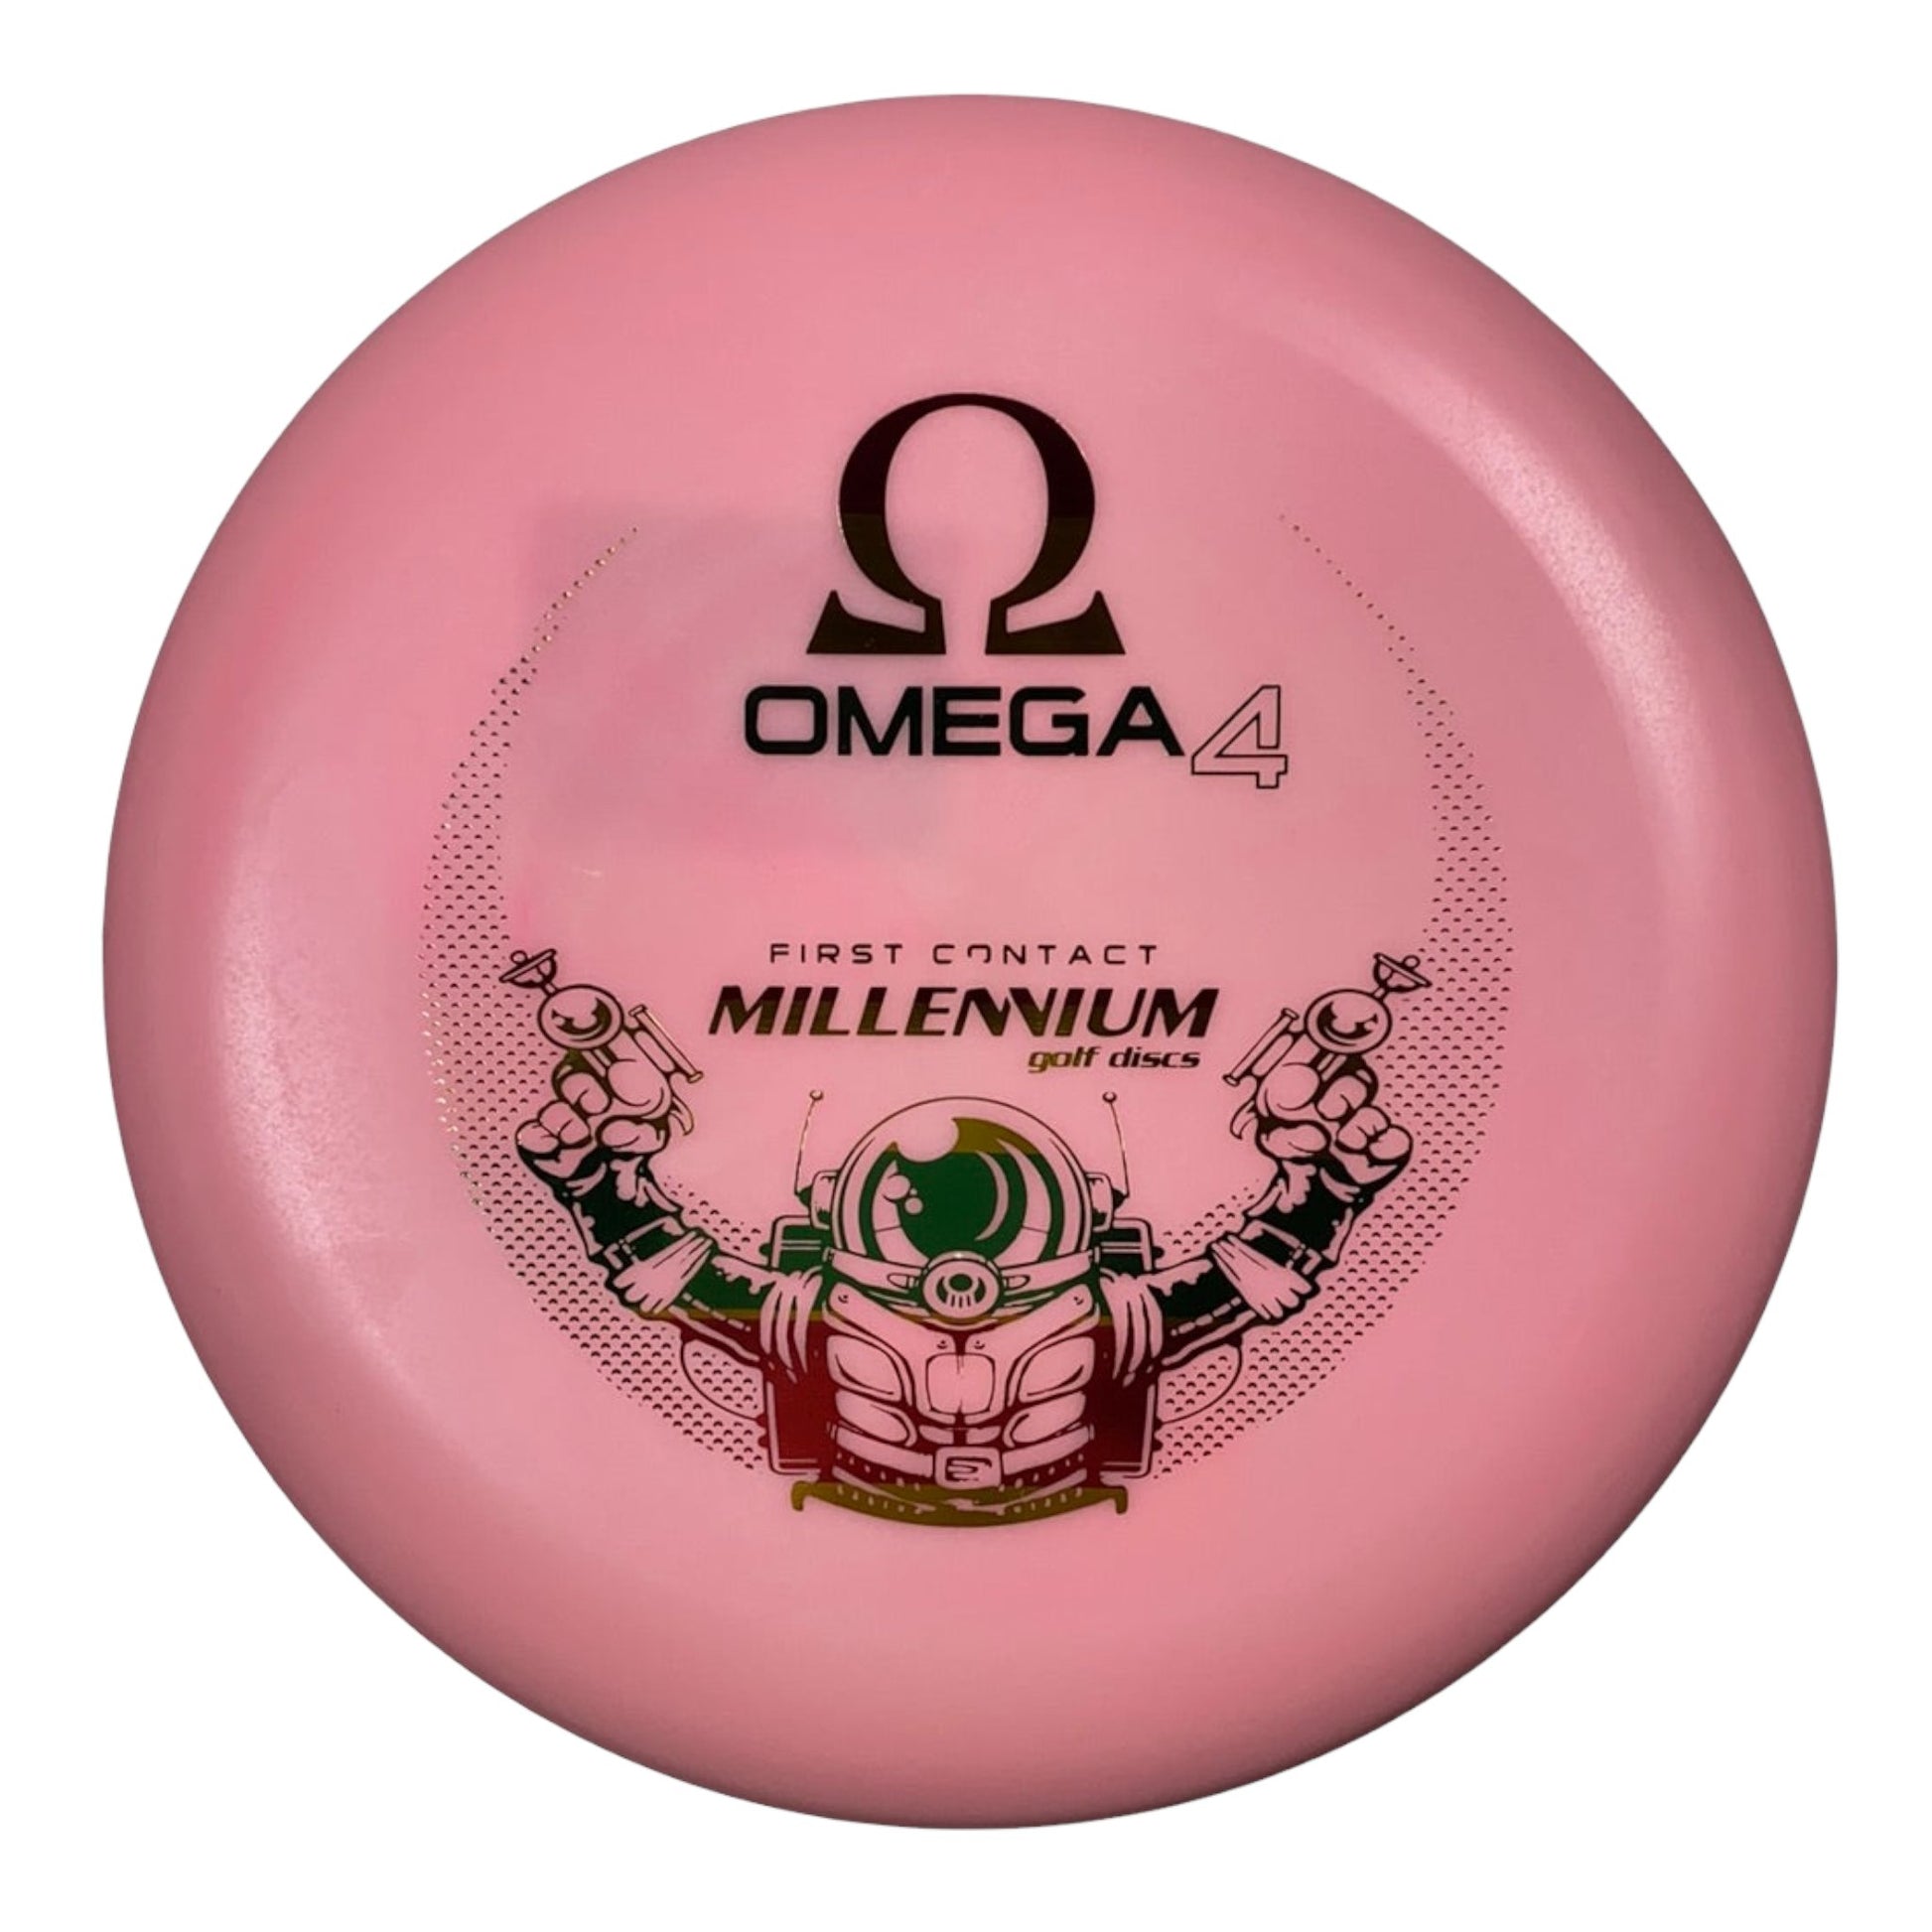 Millennium Golf Discs Omega4 | DT Lunar | Pink/Rasta 168g Disc Golf